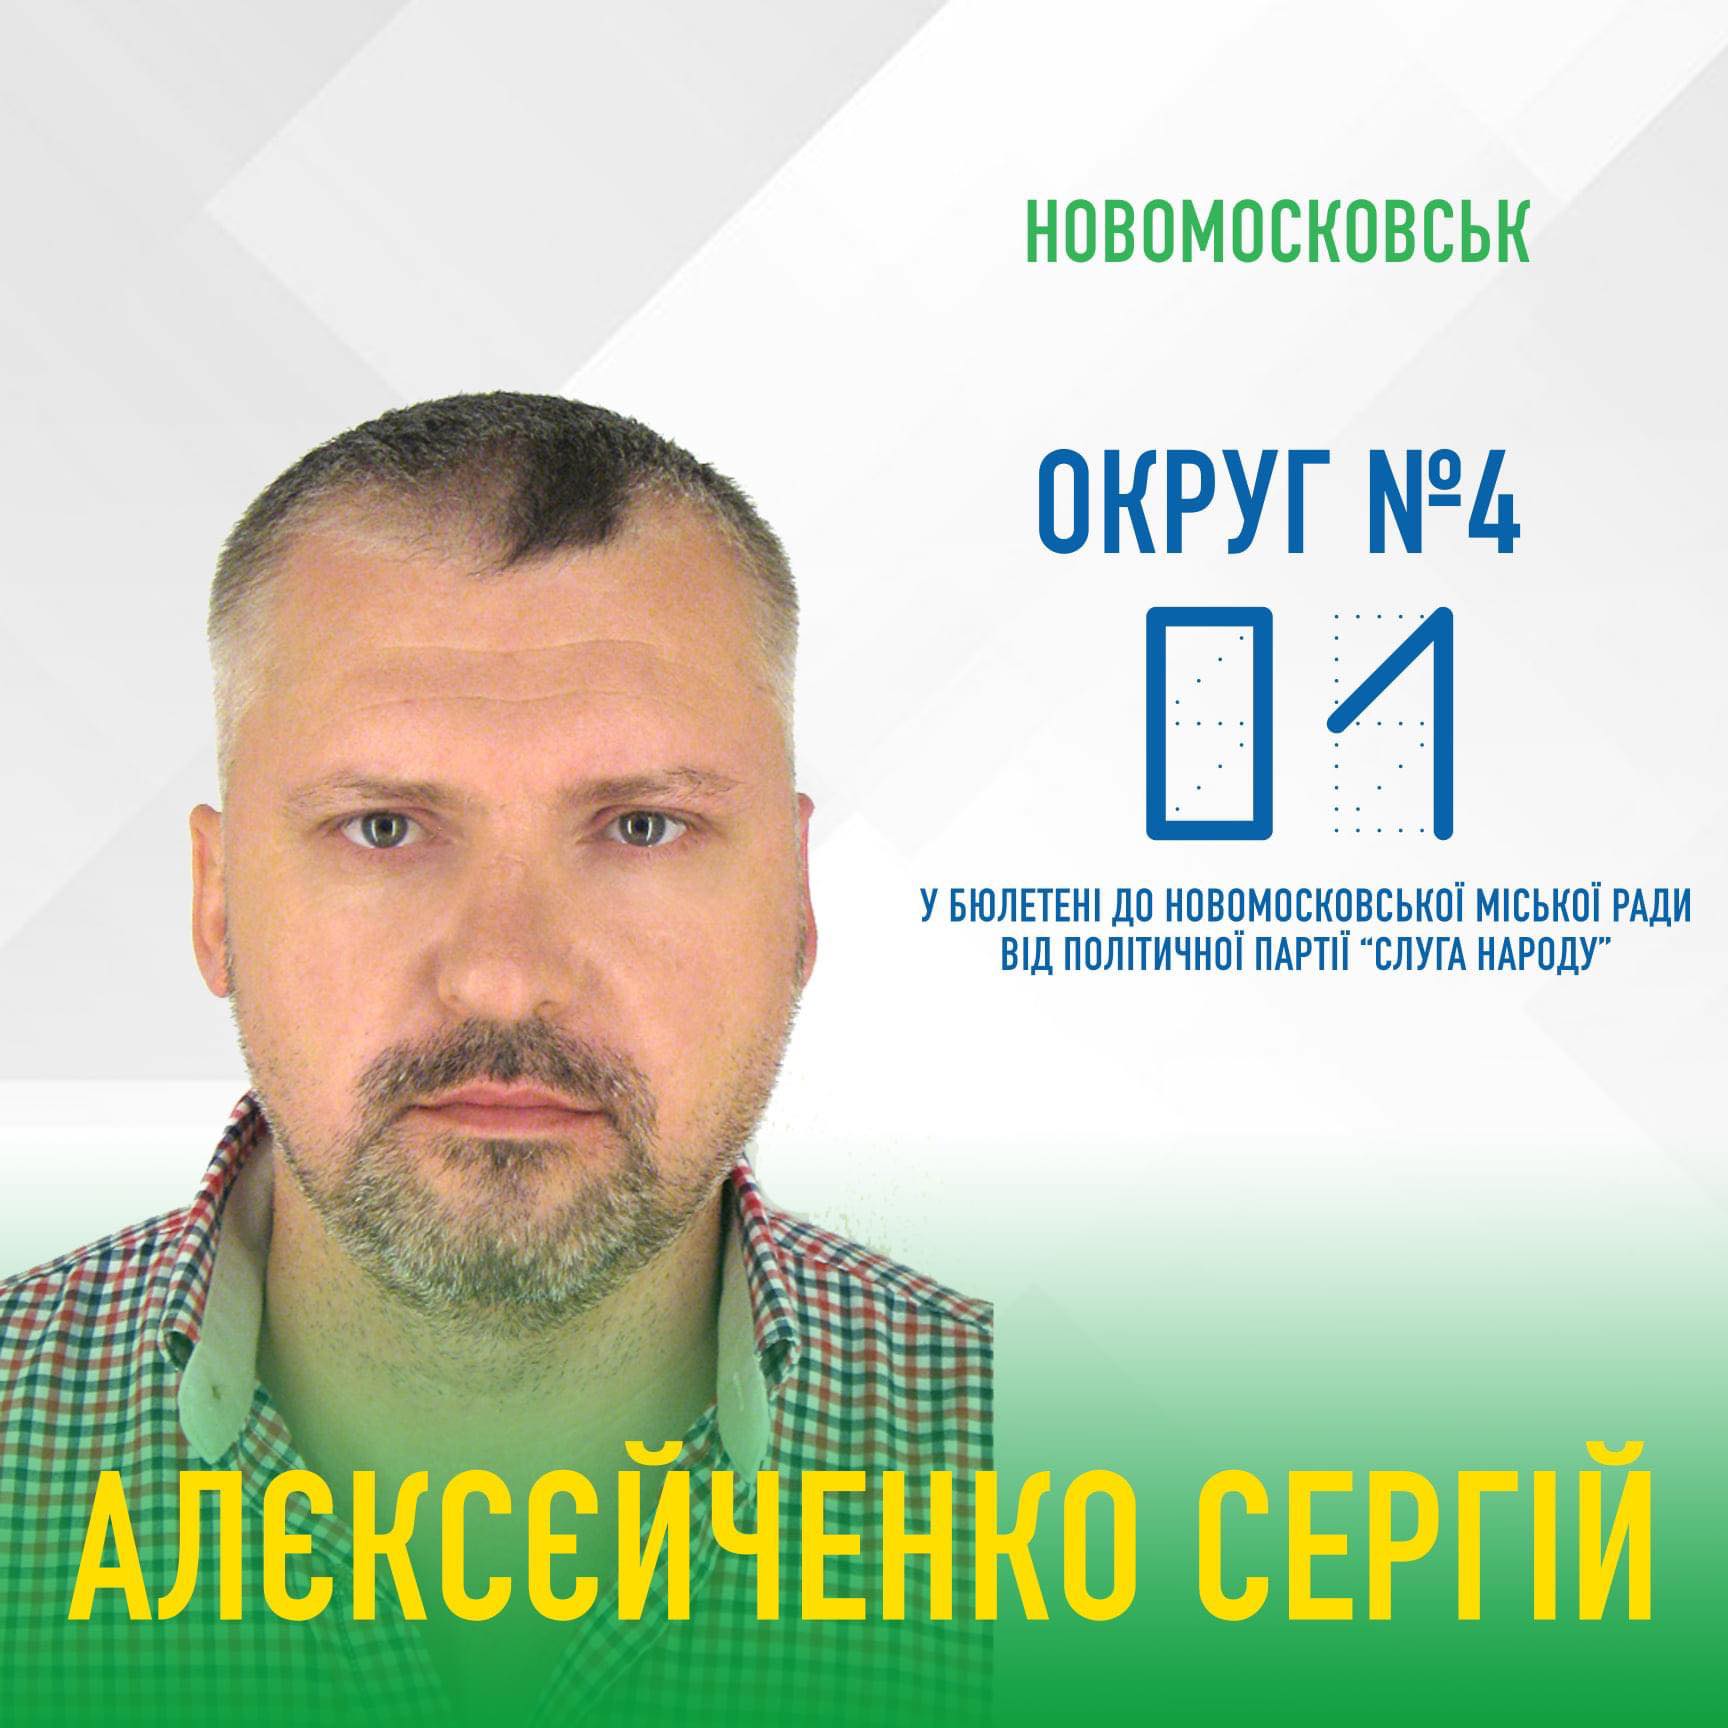 Постер с кандидатом Алексейченко